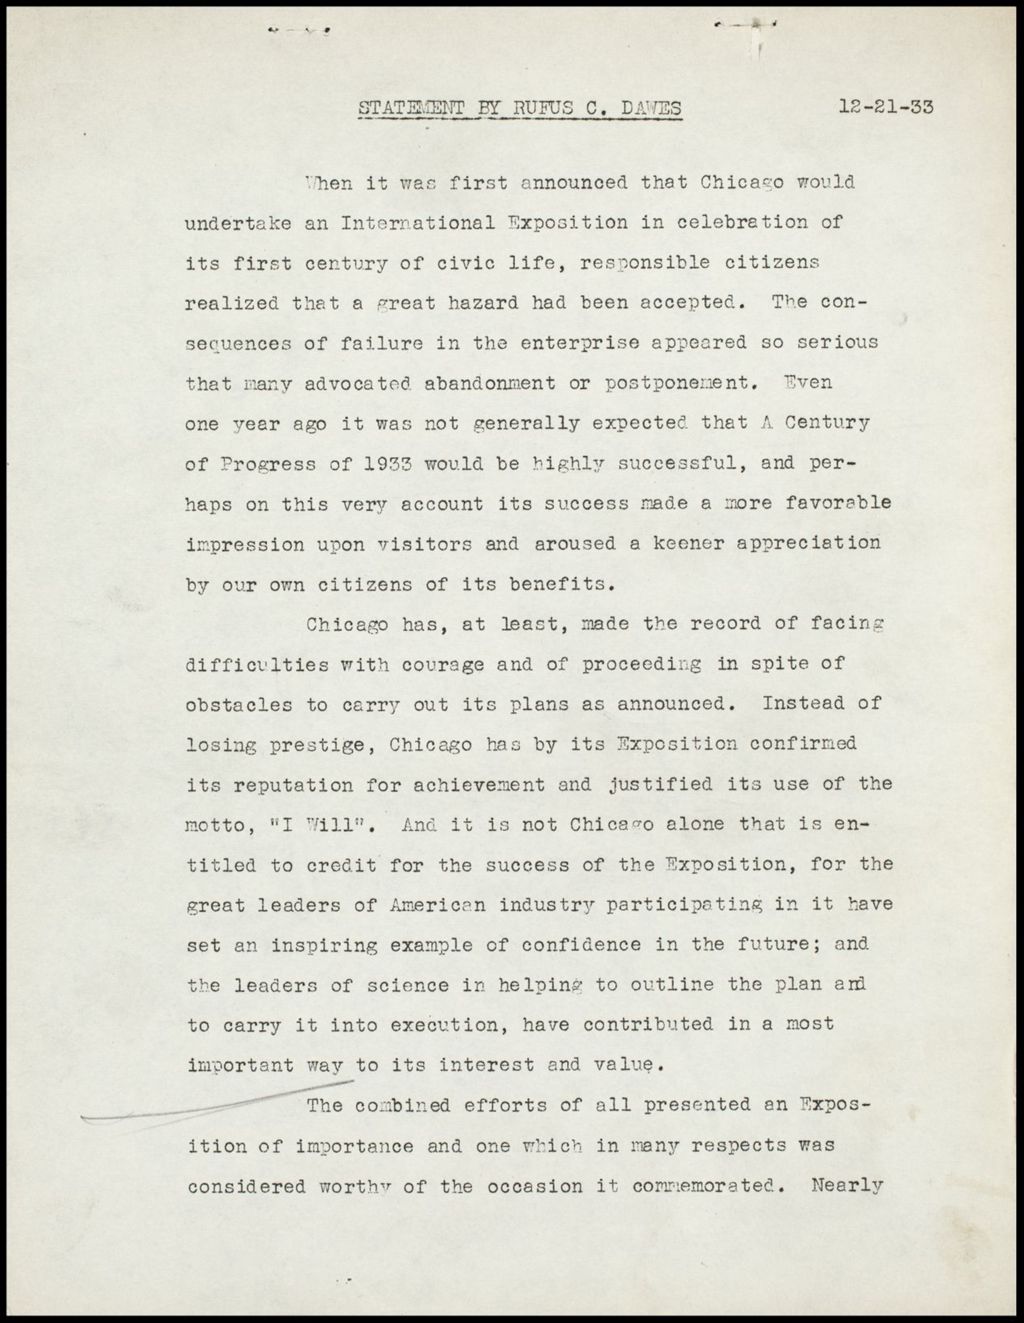 Miniature of R. C. Dawes Speech, 1934 (Folder 14-211)